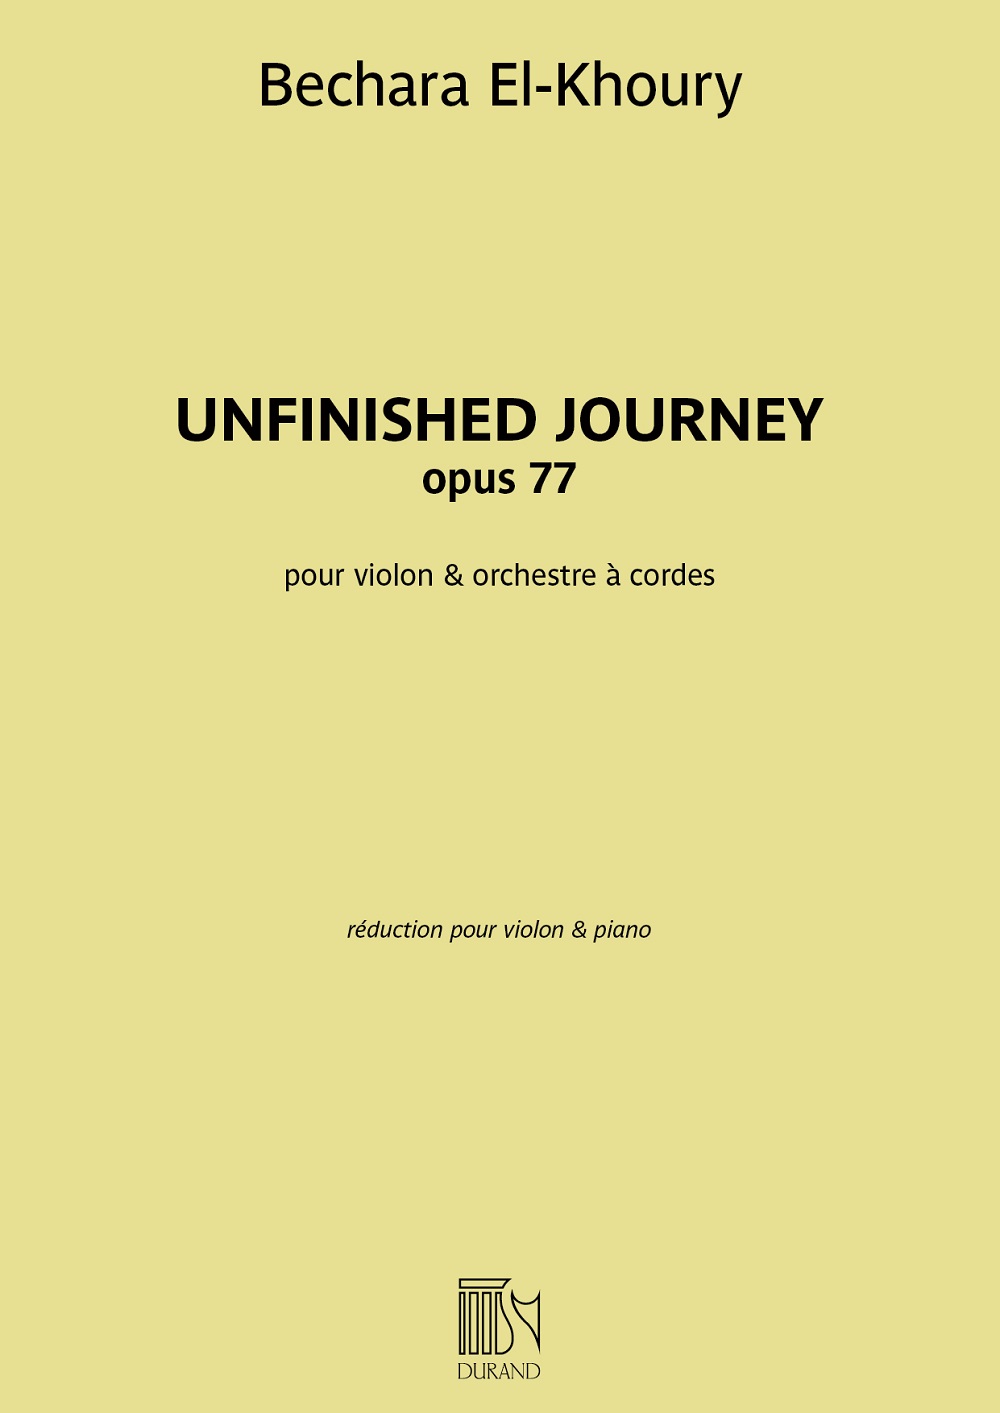 El-khoury Unfinished Journey Opus 77 Sheet Music Songbook